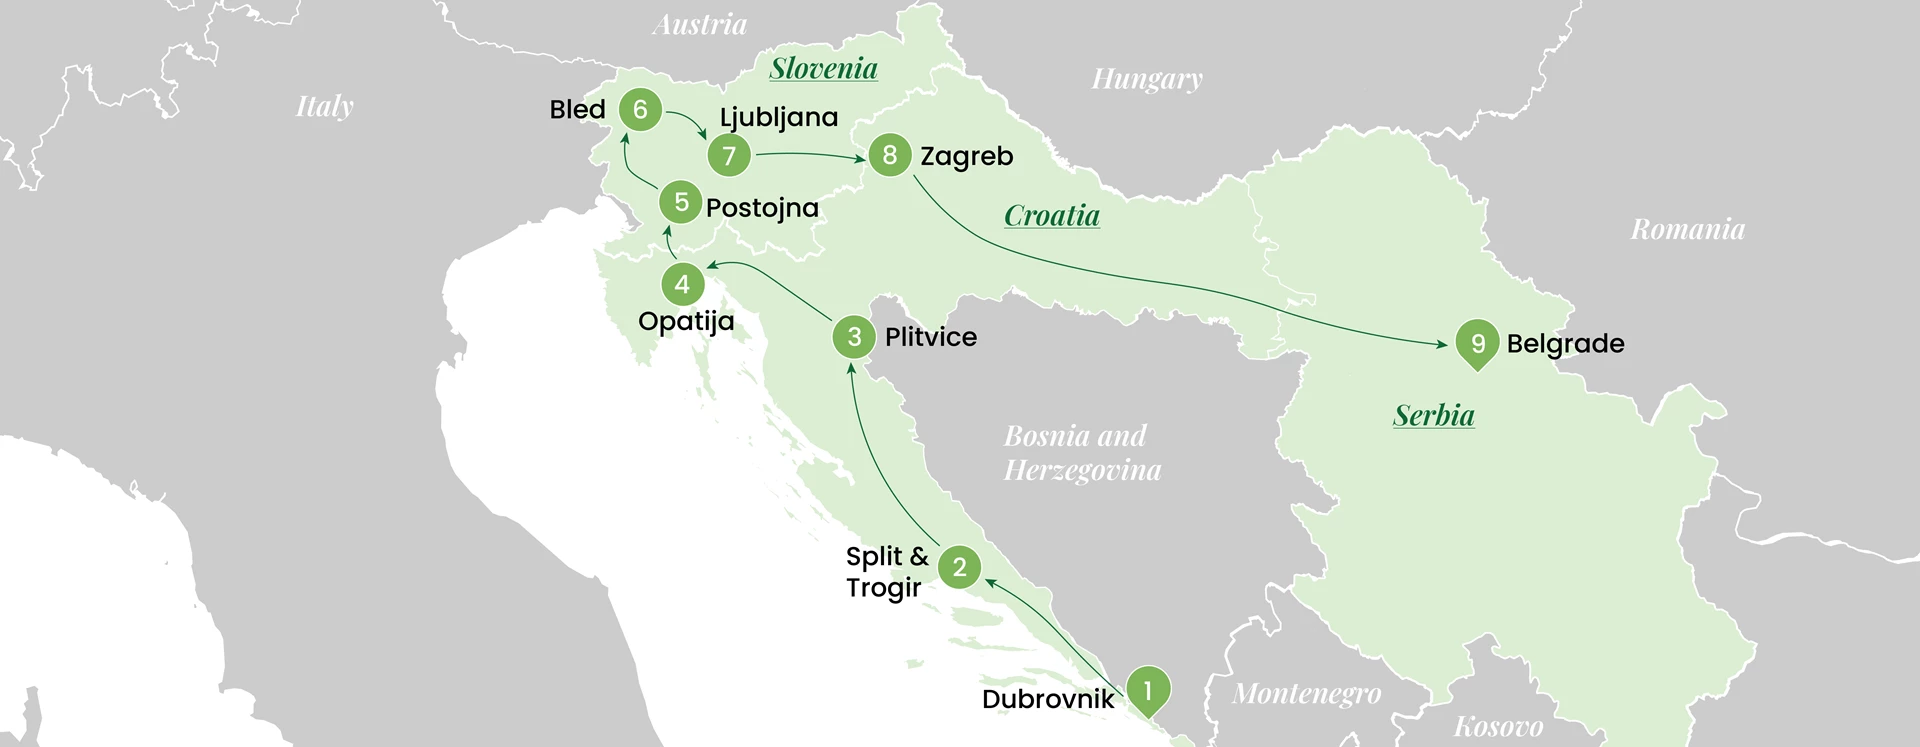 From Croatia to Serbia via Slovenia